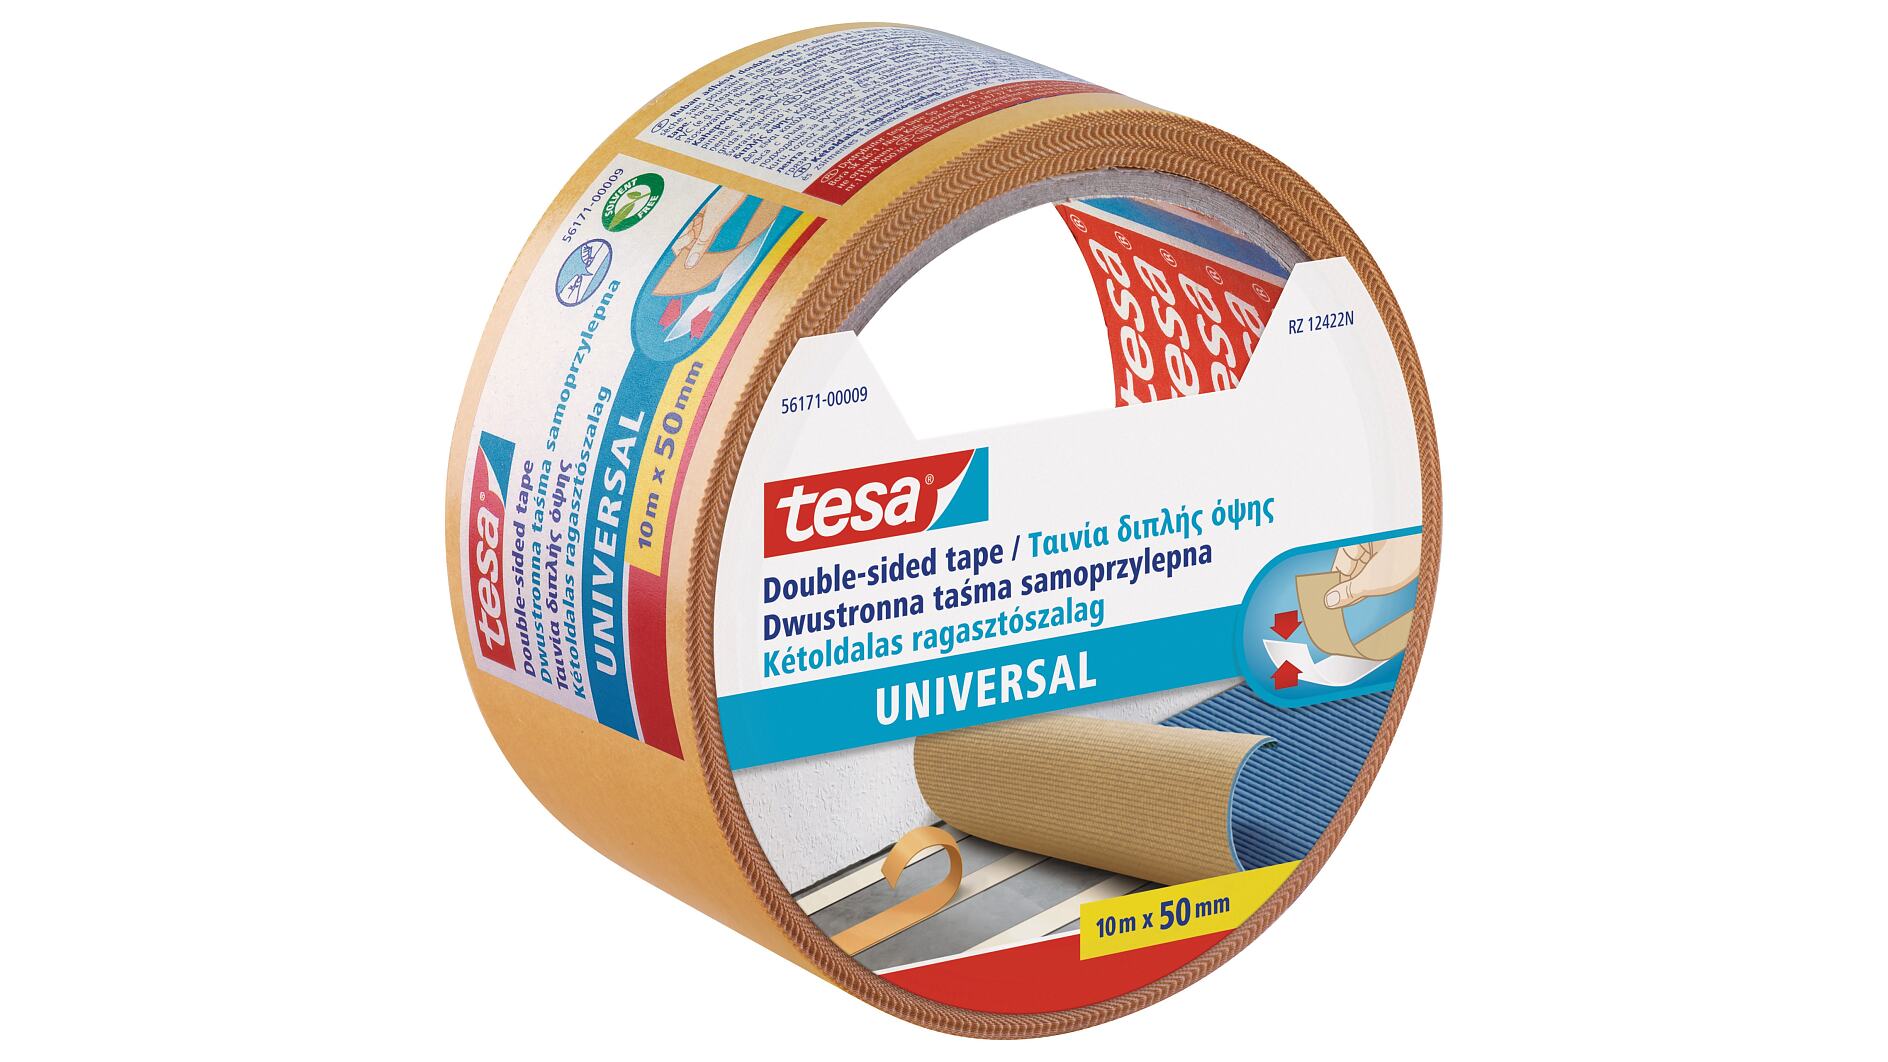 tesa® Double-Sided Tape Universal - tesa